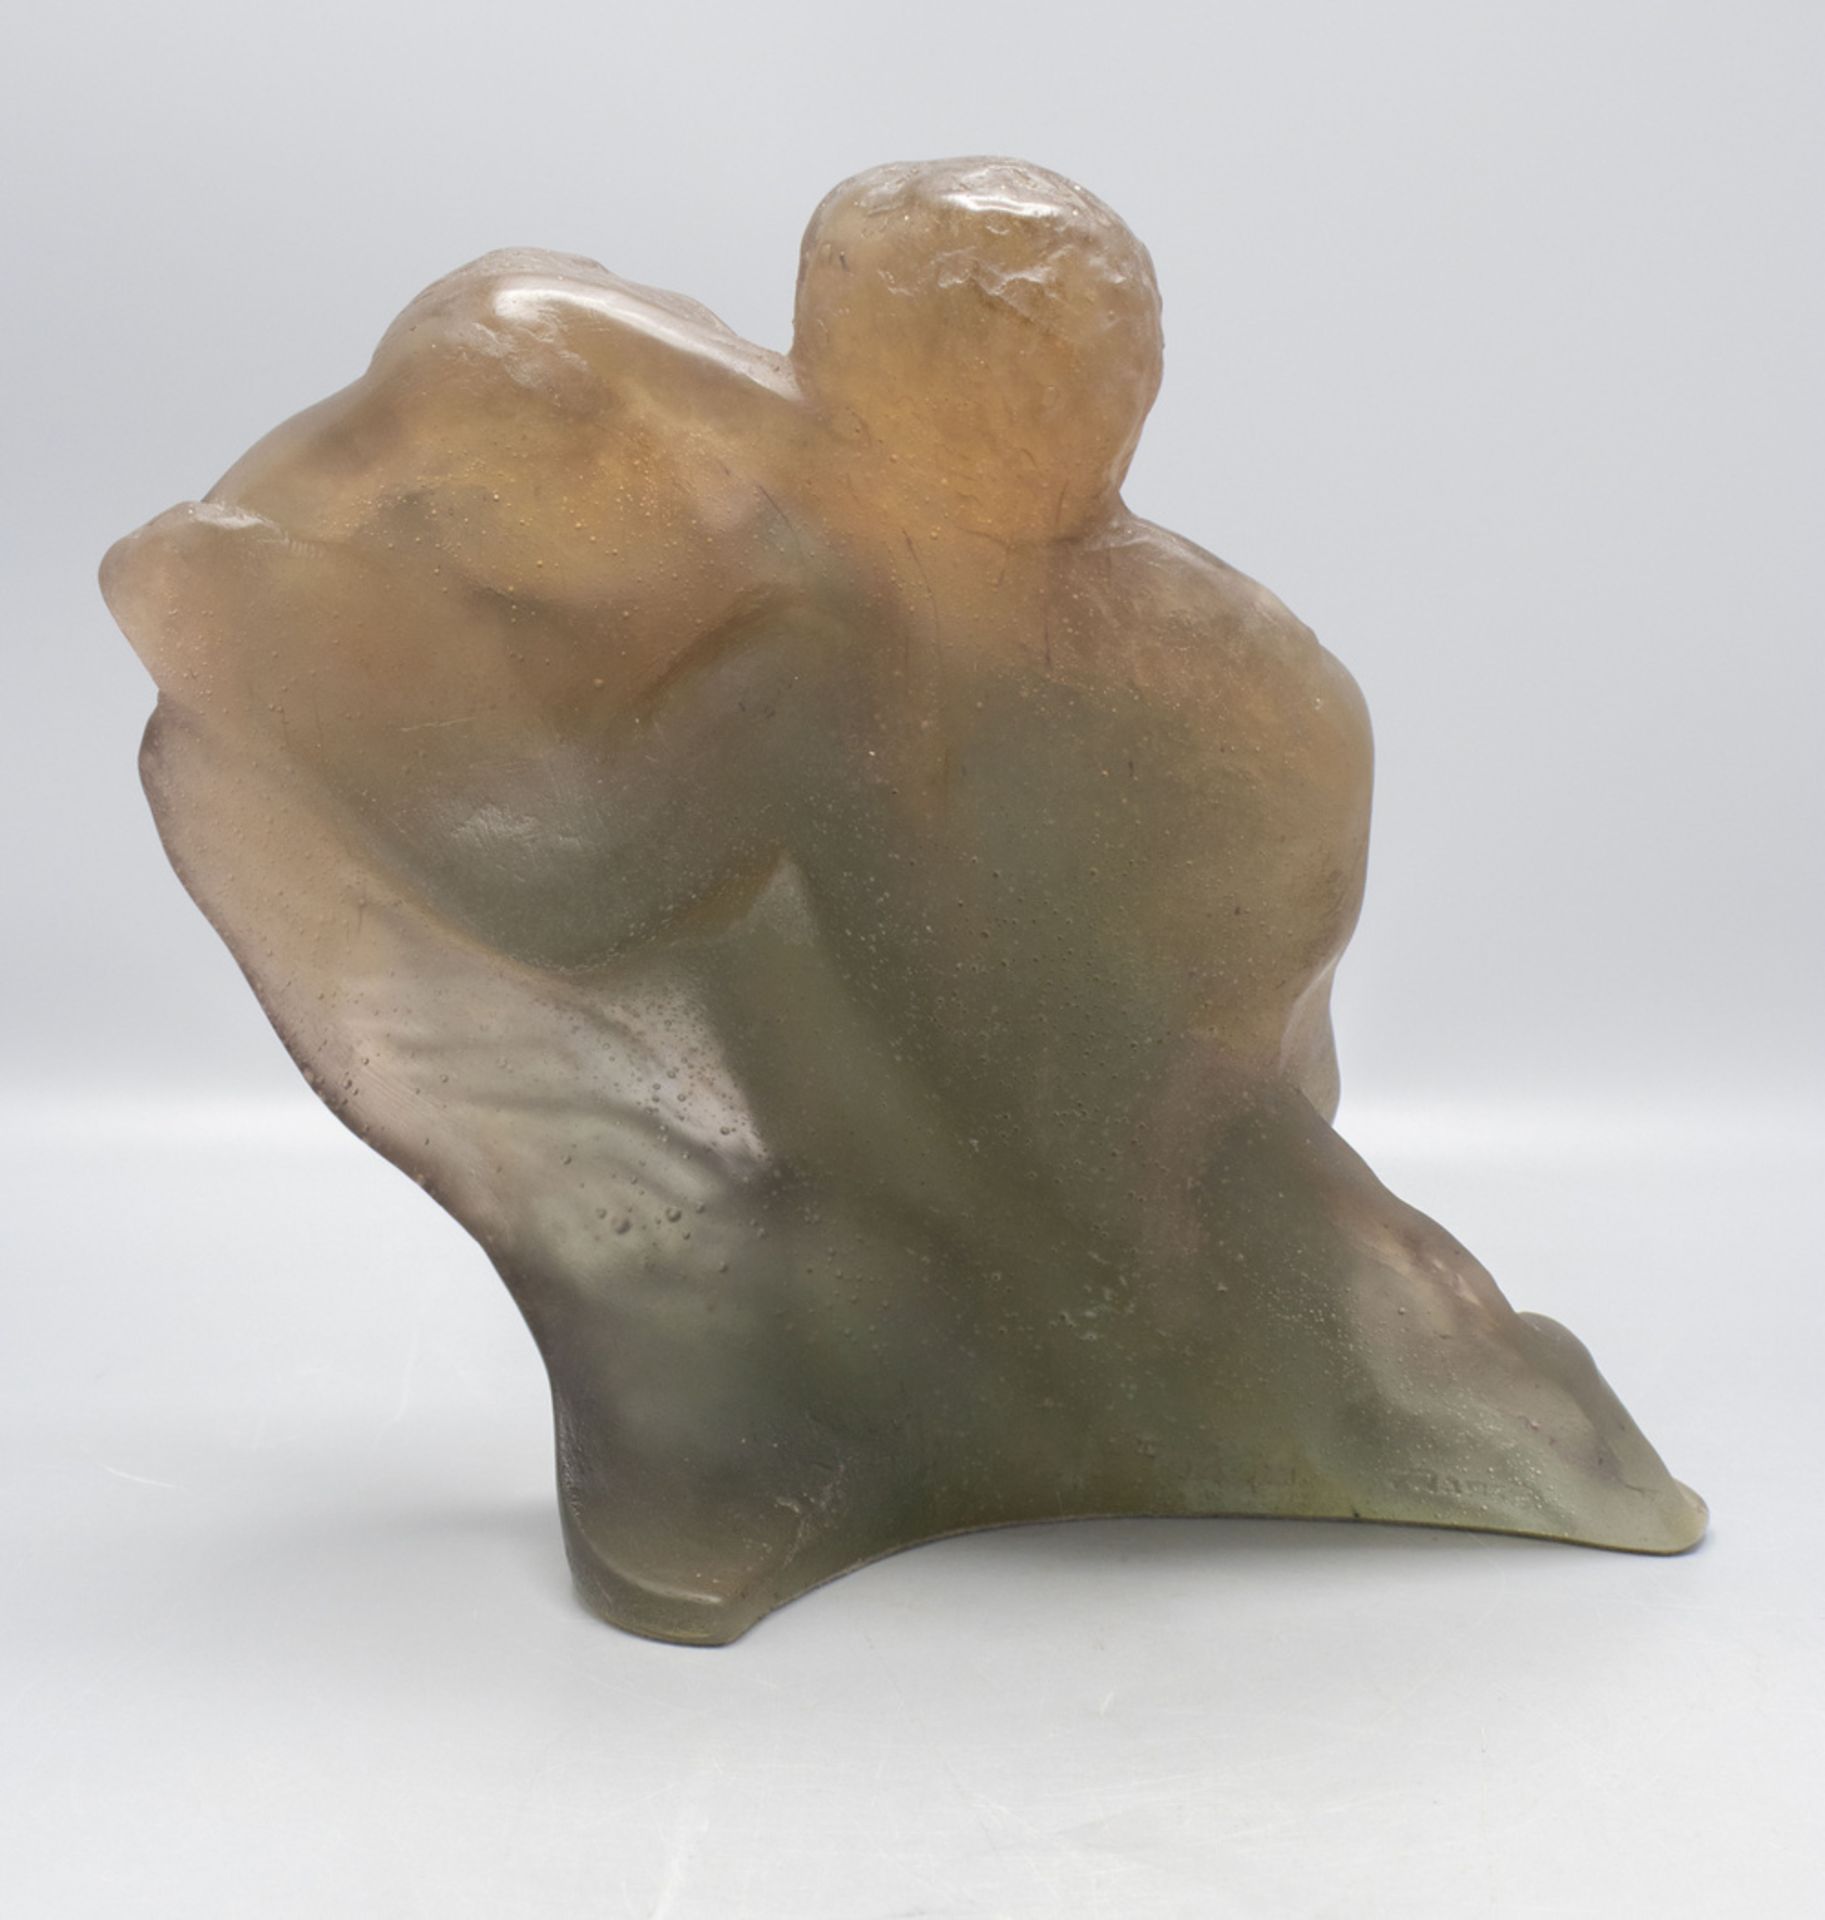 Patè de Verre Glasskulptur 'Liebespaar', Daum France, Frankreich, 1960er Jahre - Image 4 of 8